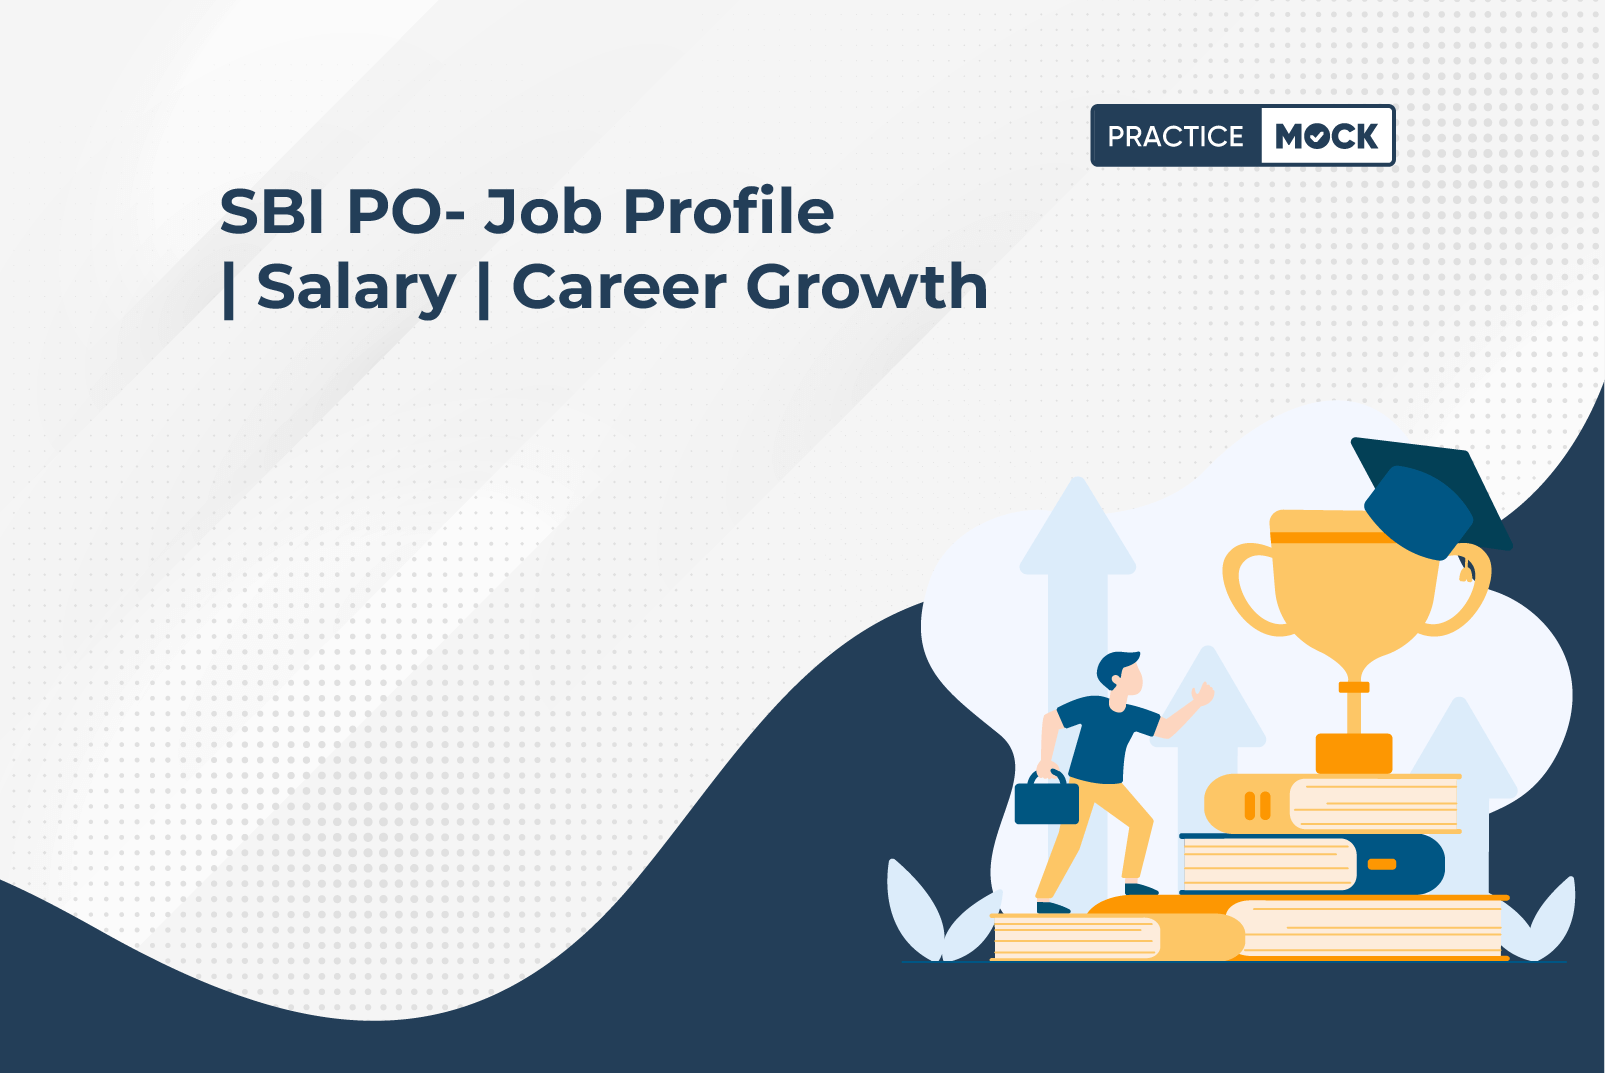 SBI PO- Job Profile Salary Career Growth (1)